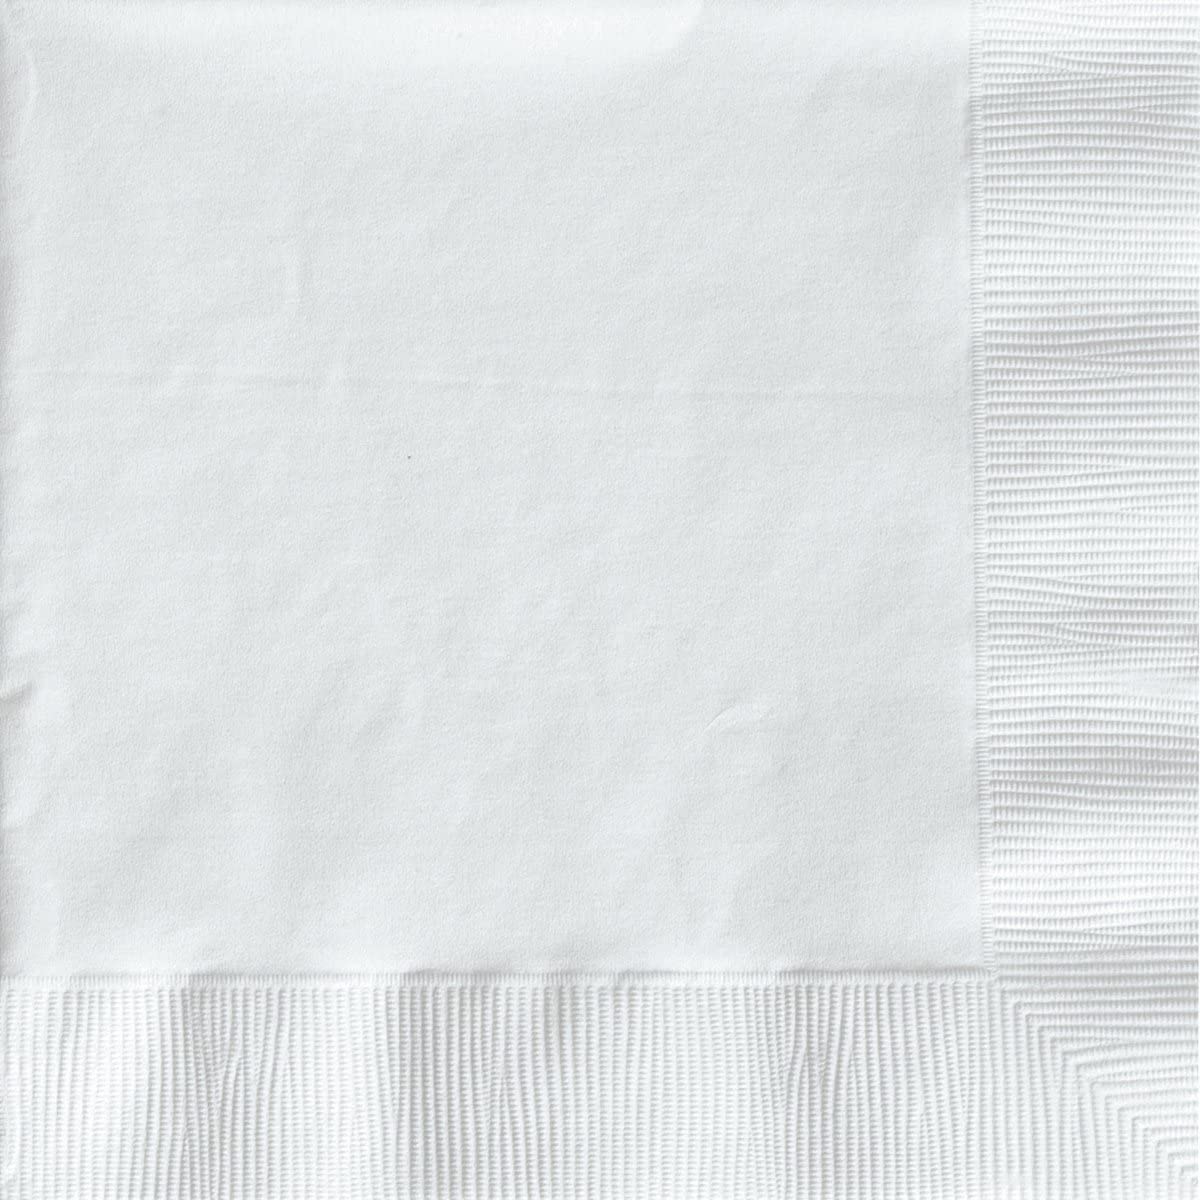 2 PLY WHITE BEVERAGE NAPKIN.
600/CASE (12pk of 50 napkins),
4/19